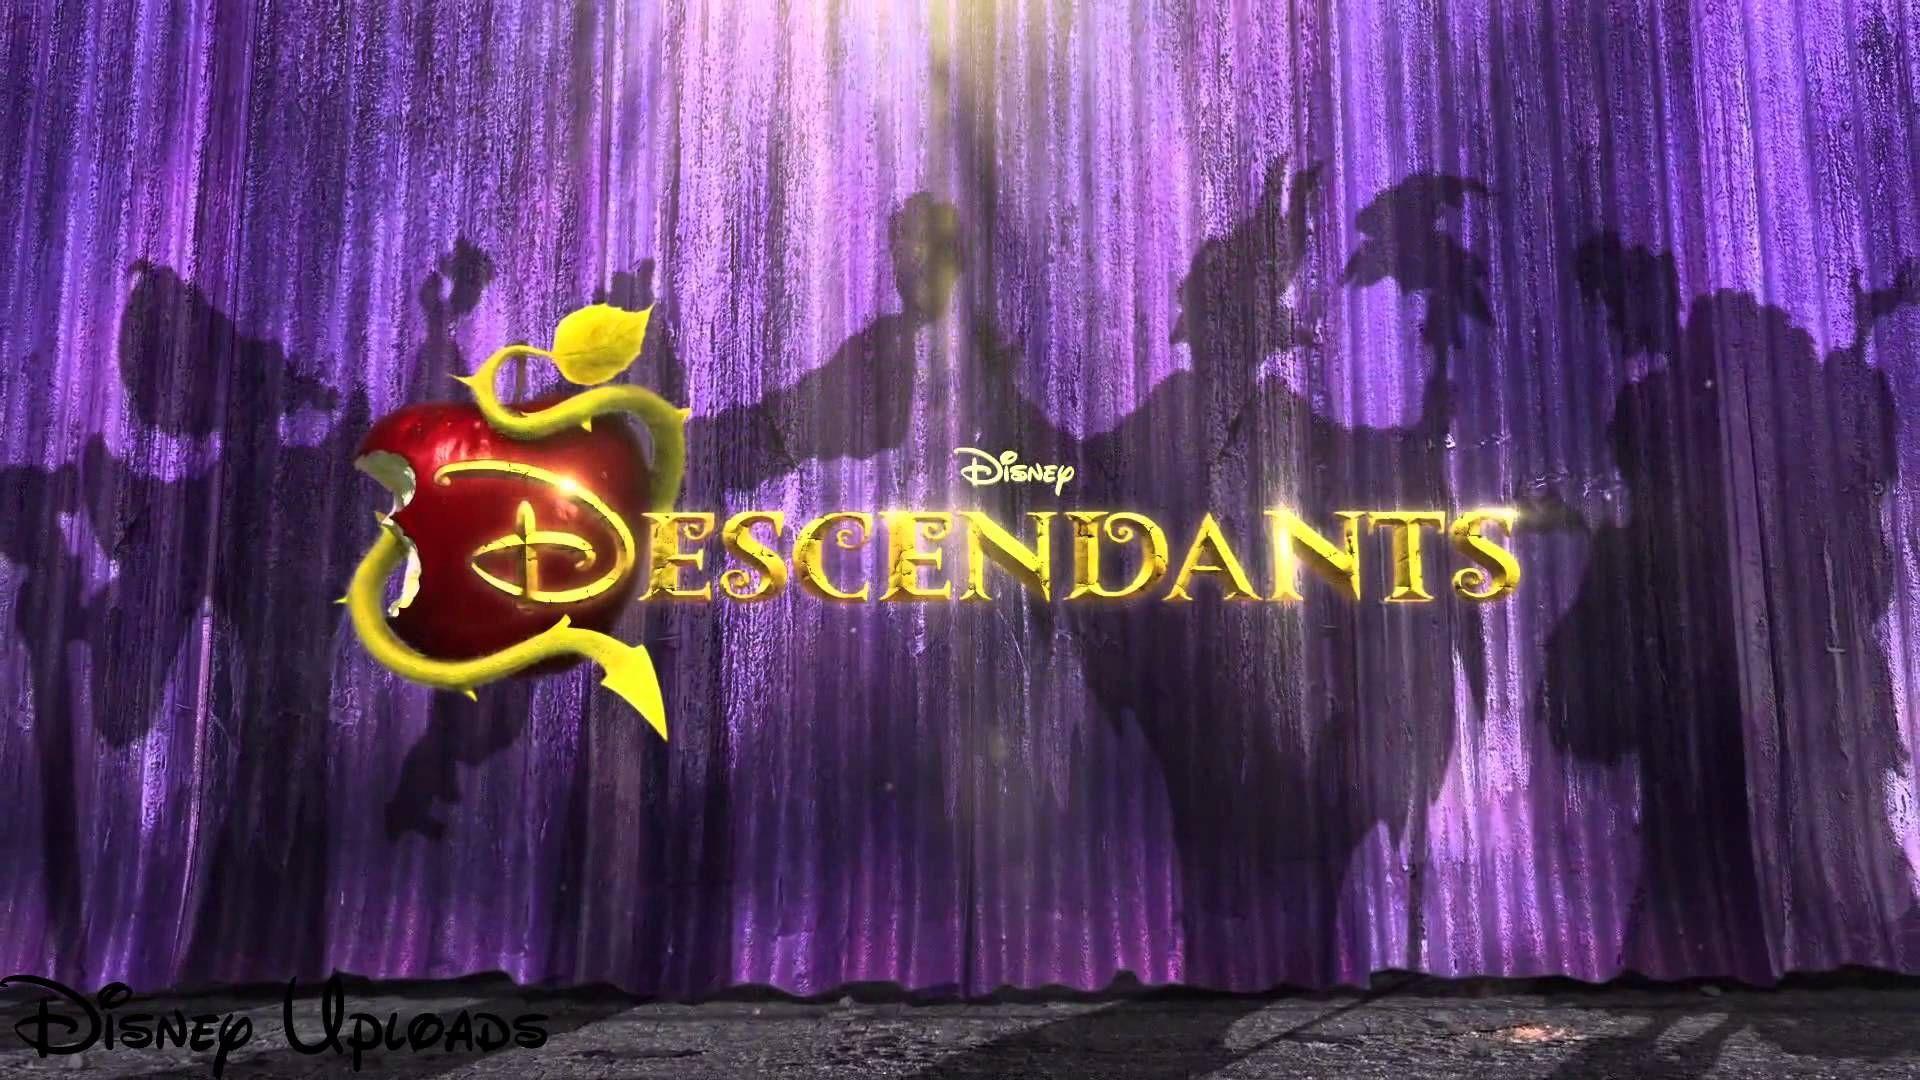 YouTube. Disney descendants characters, Disney descendants, Disney descendants movie